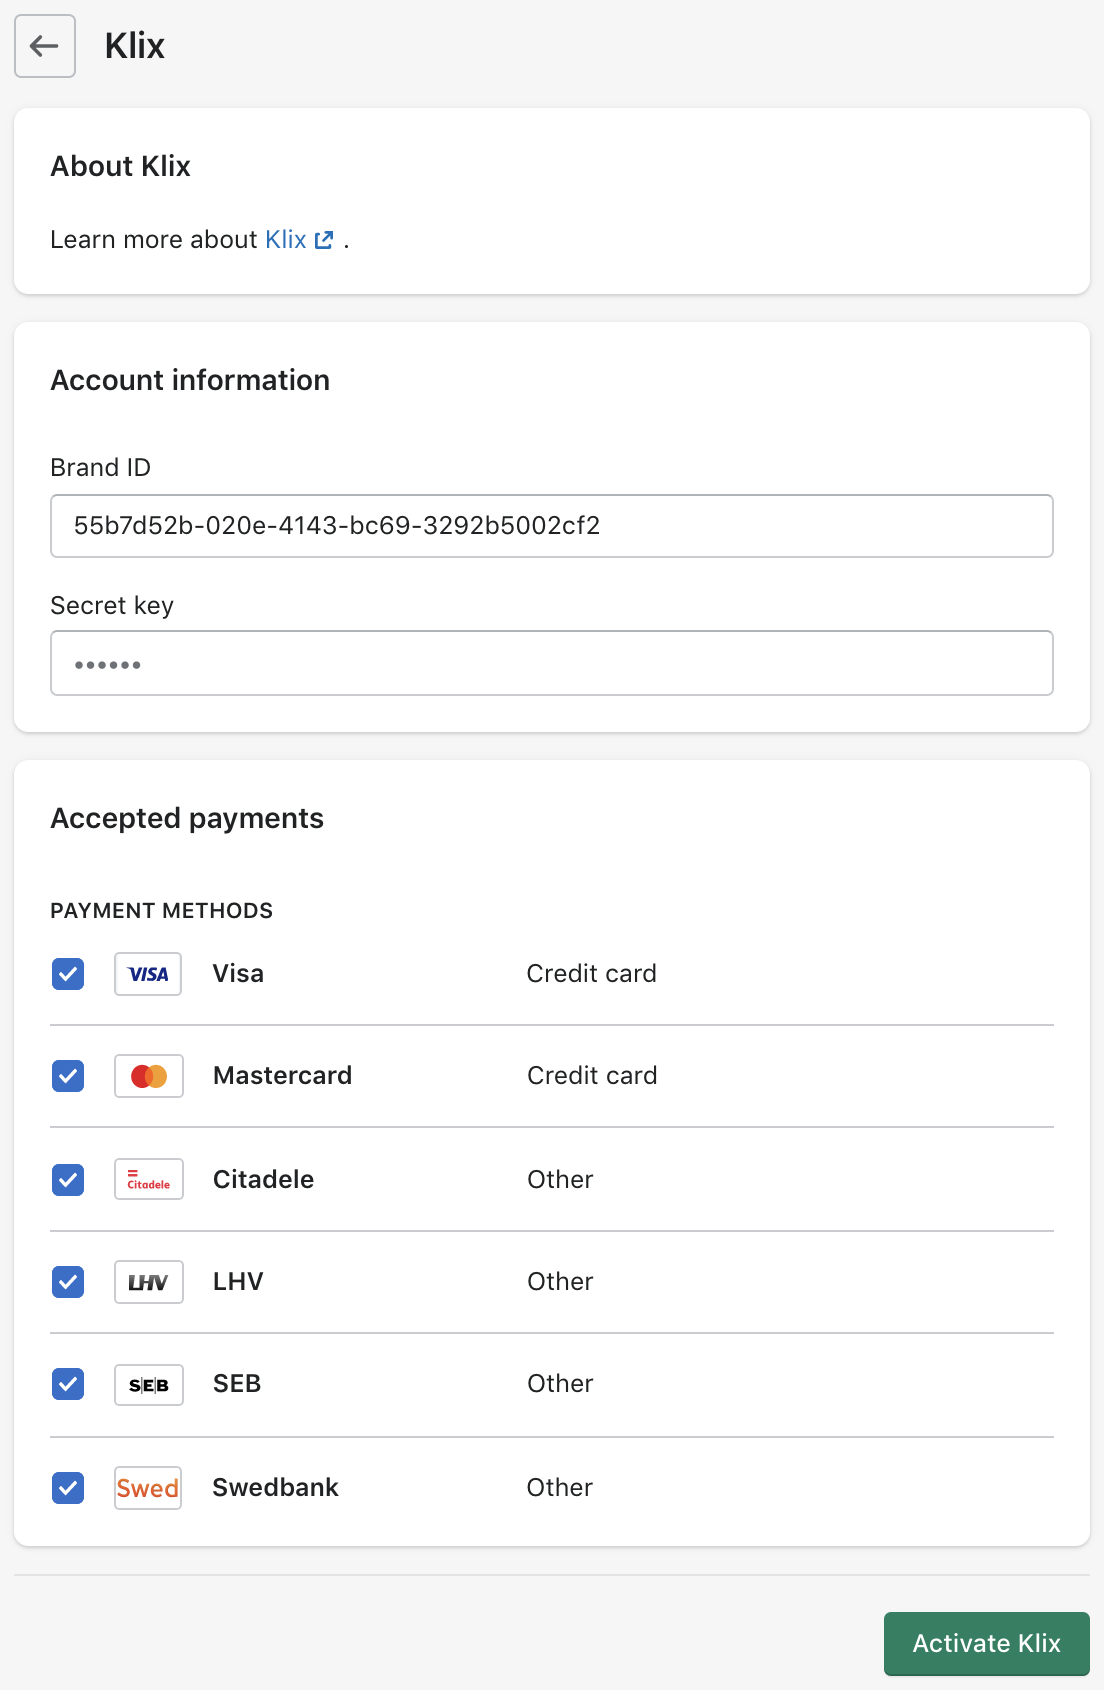 Klix payment method configuration screen